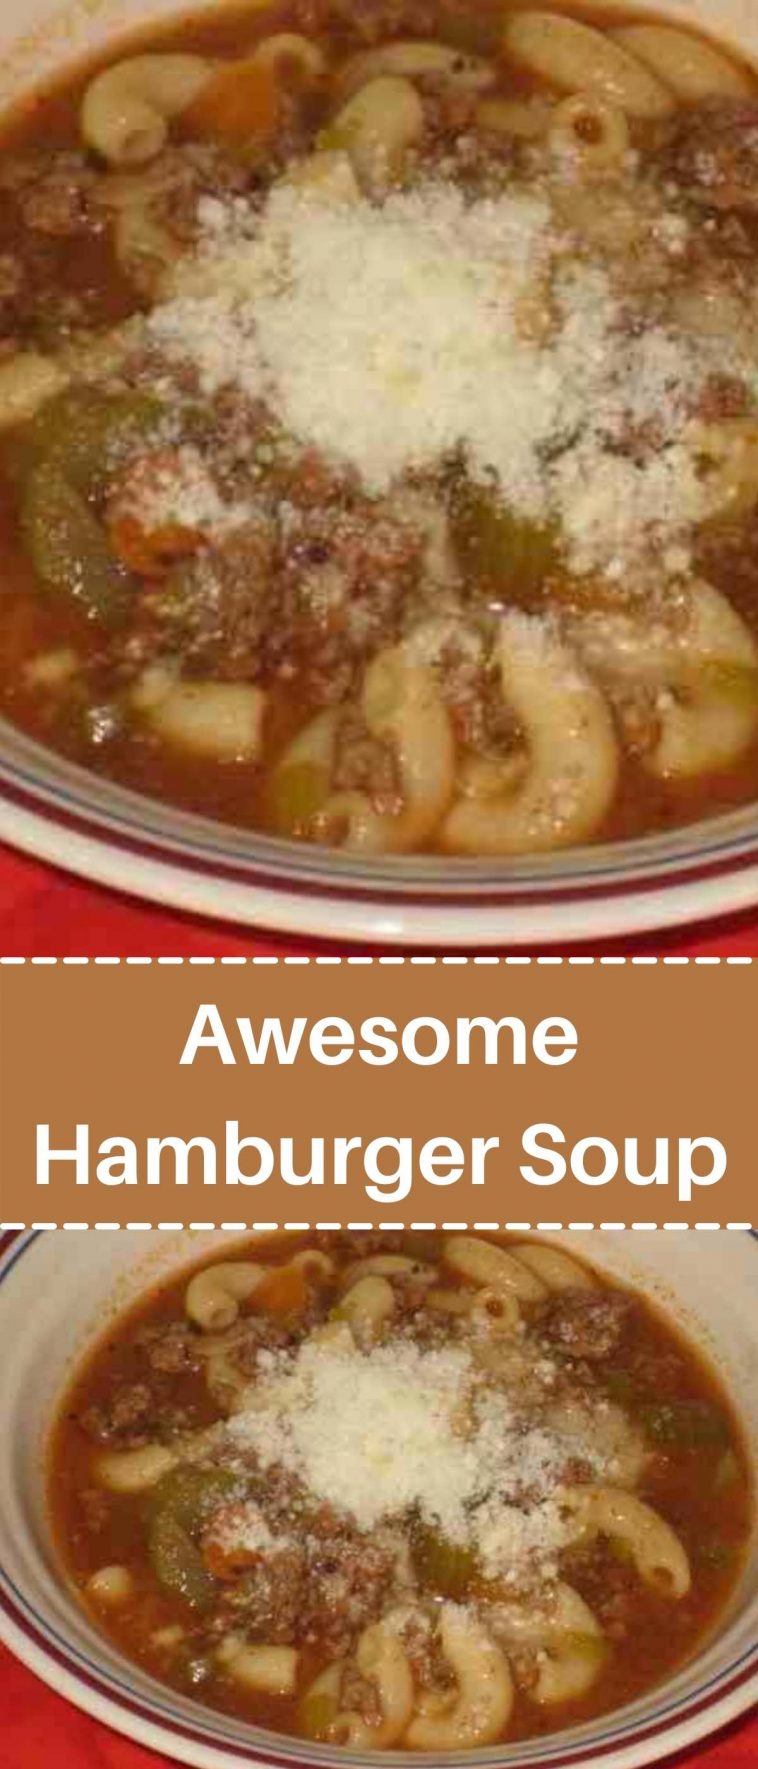 Awesome Hamburger Soup